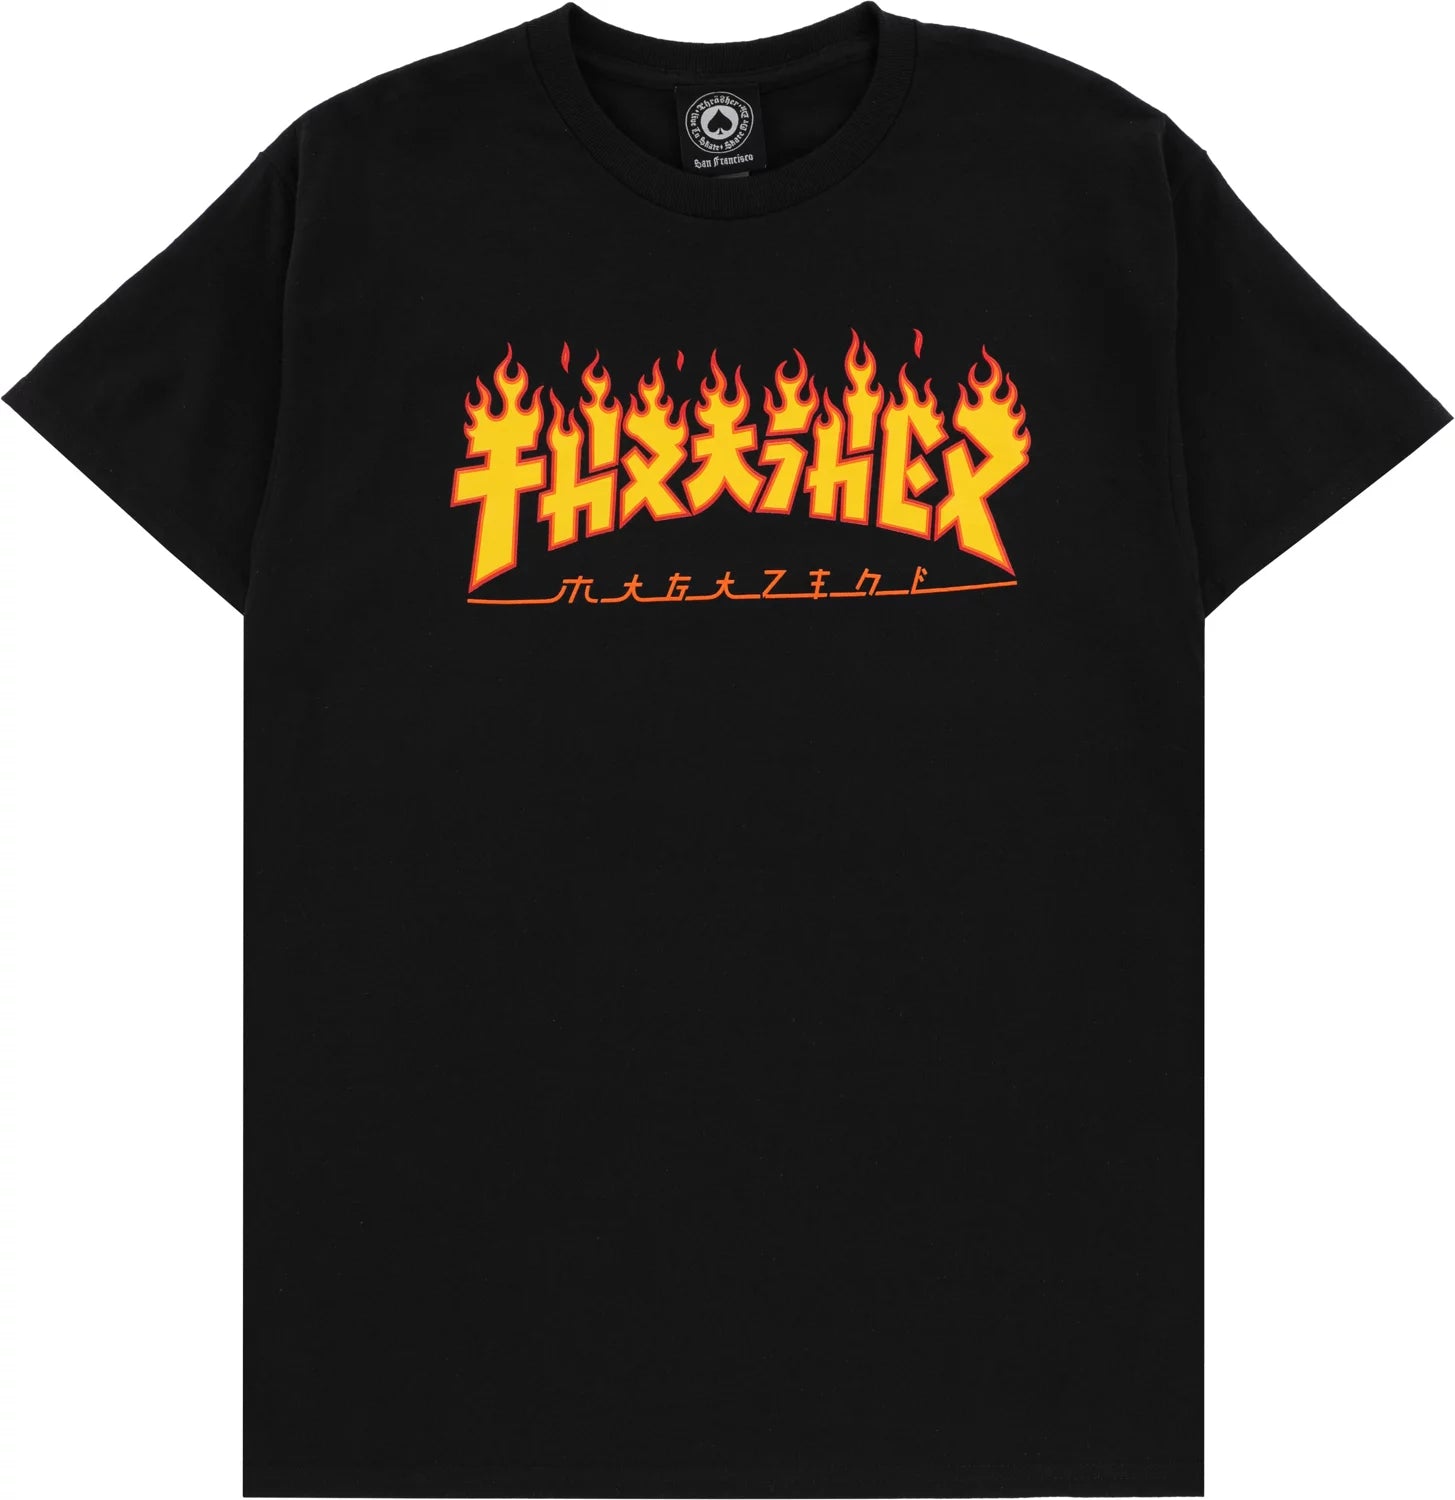 THRASHER GODZILLA FLAME T-SHIRT - BLACK - The Drive Skateshop